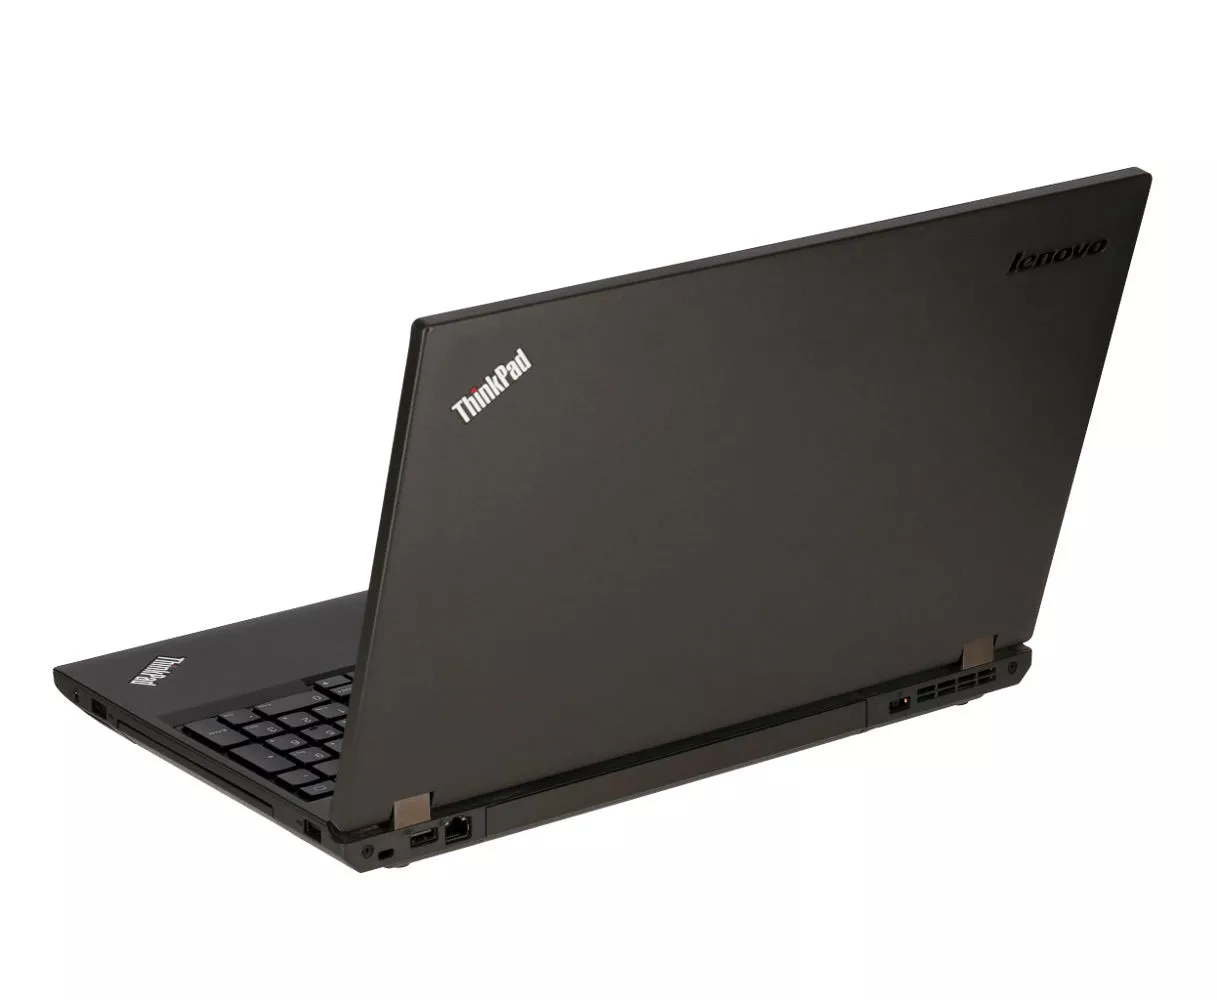 Lenovo ThinkPad L540 Core i3 4000M 2,4 GHz